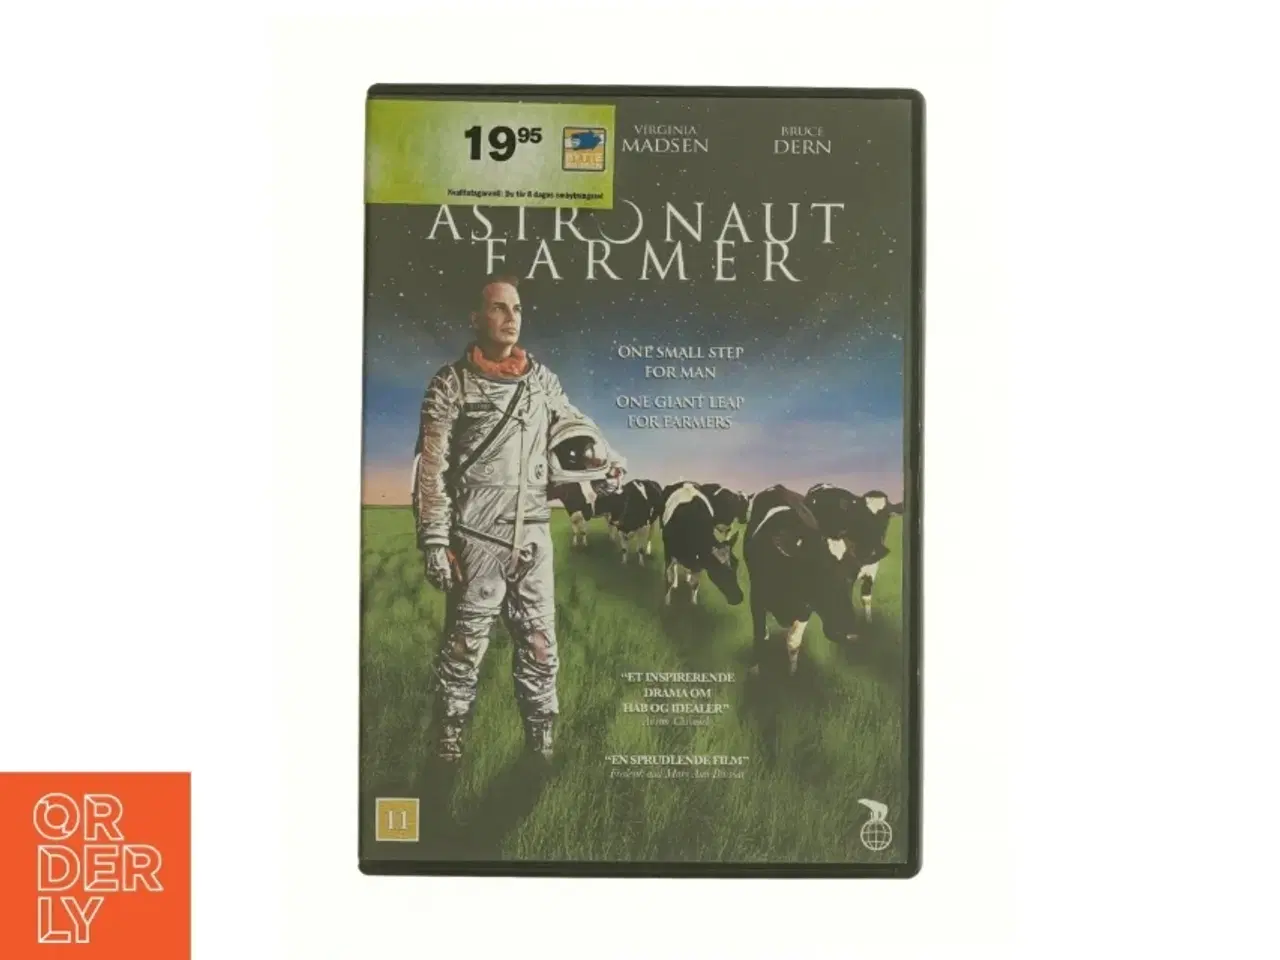 Billede 1 - Astronaut farmer fra dvd